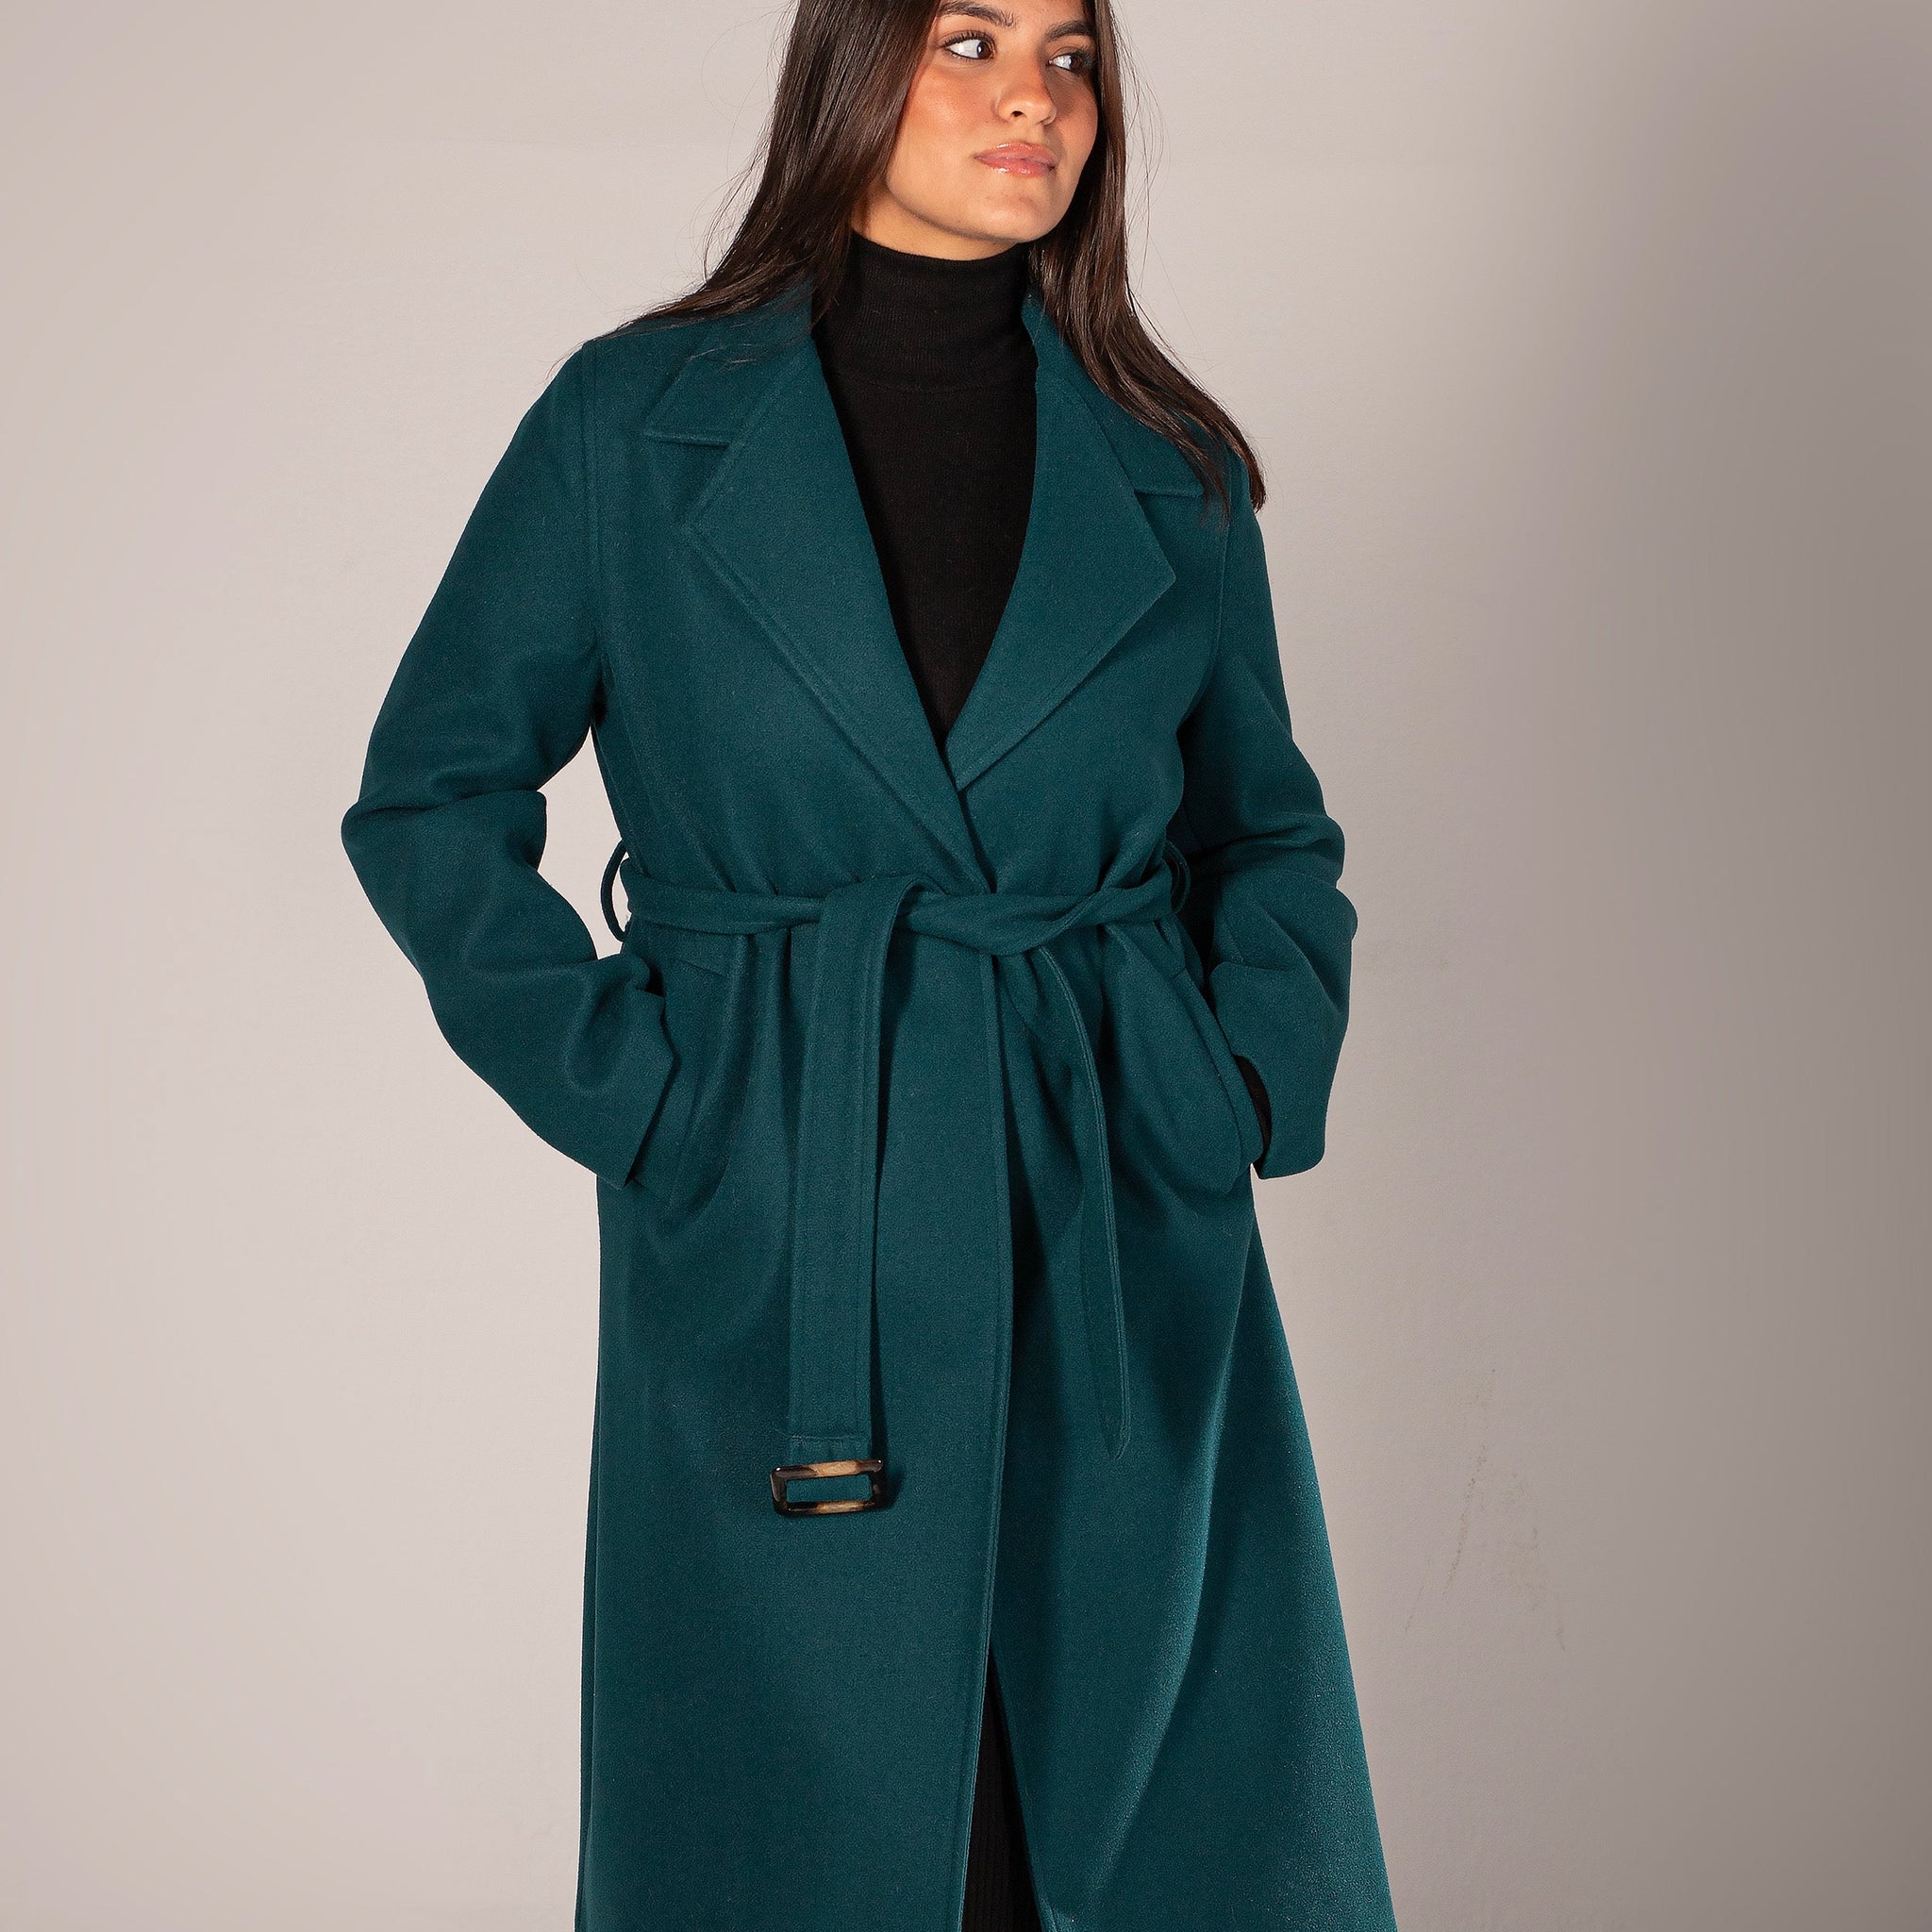 Turquoise Wool-blend coat